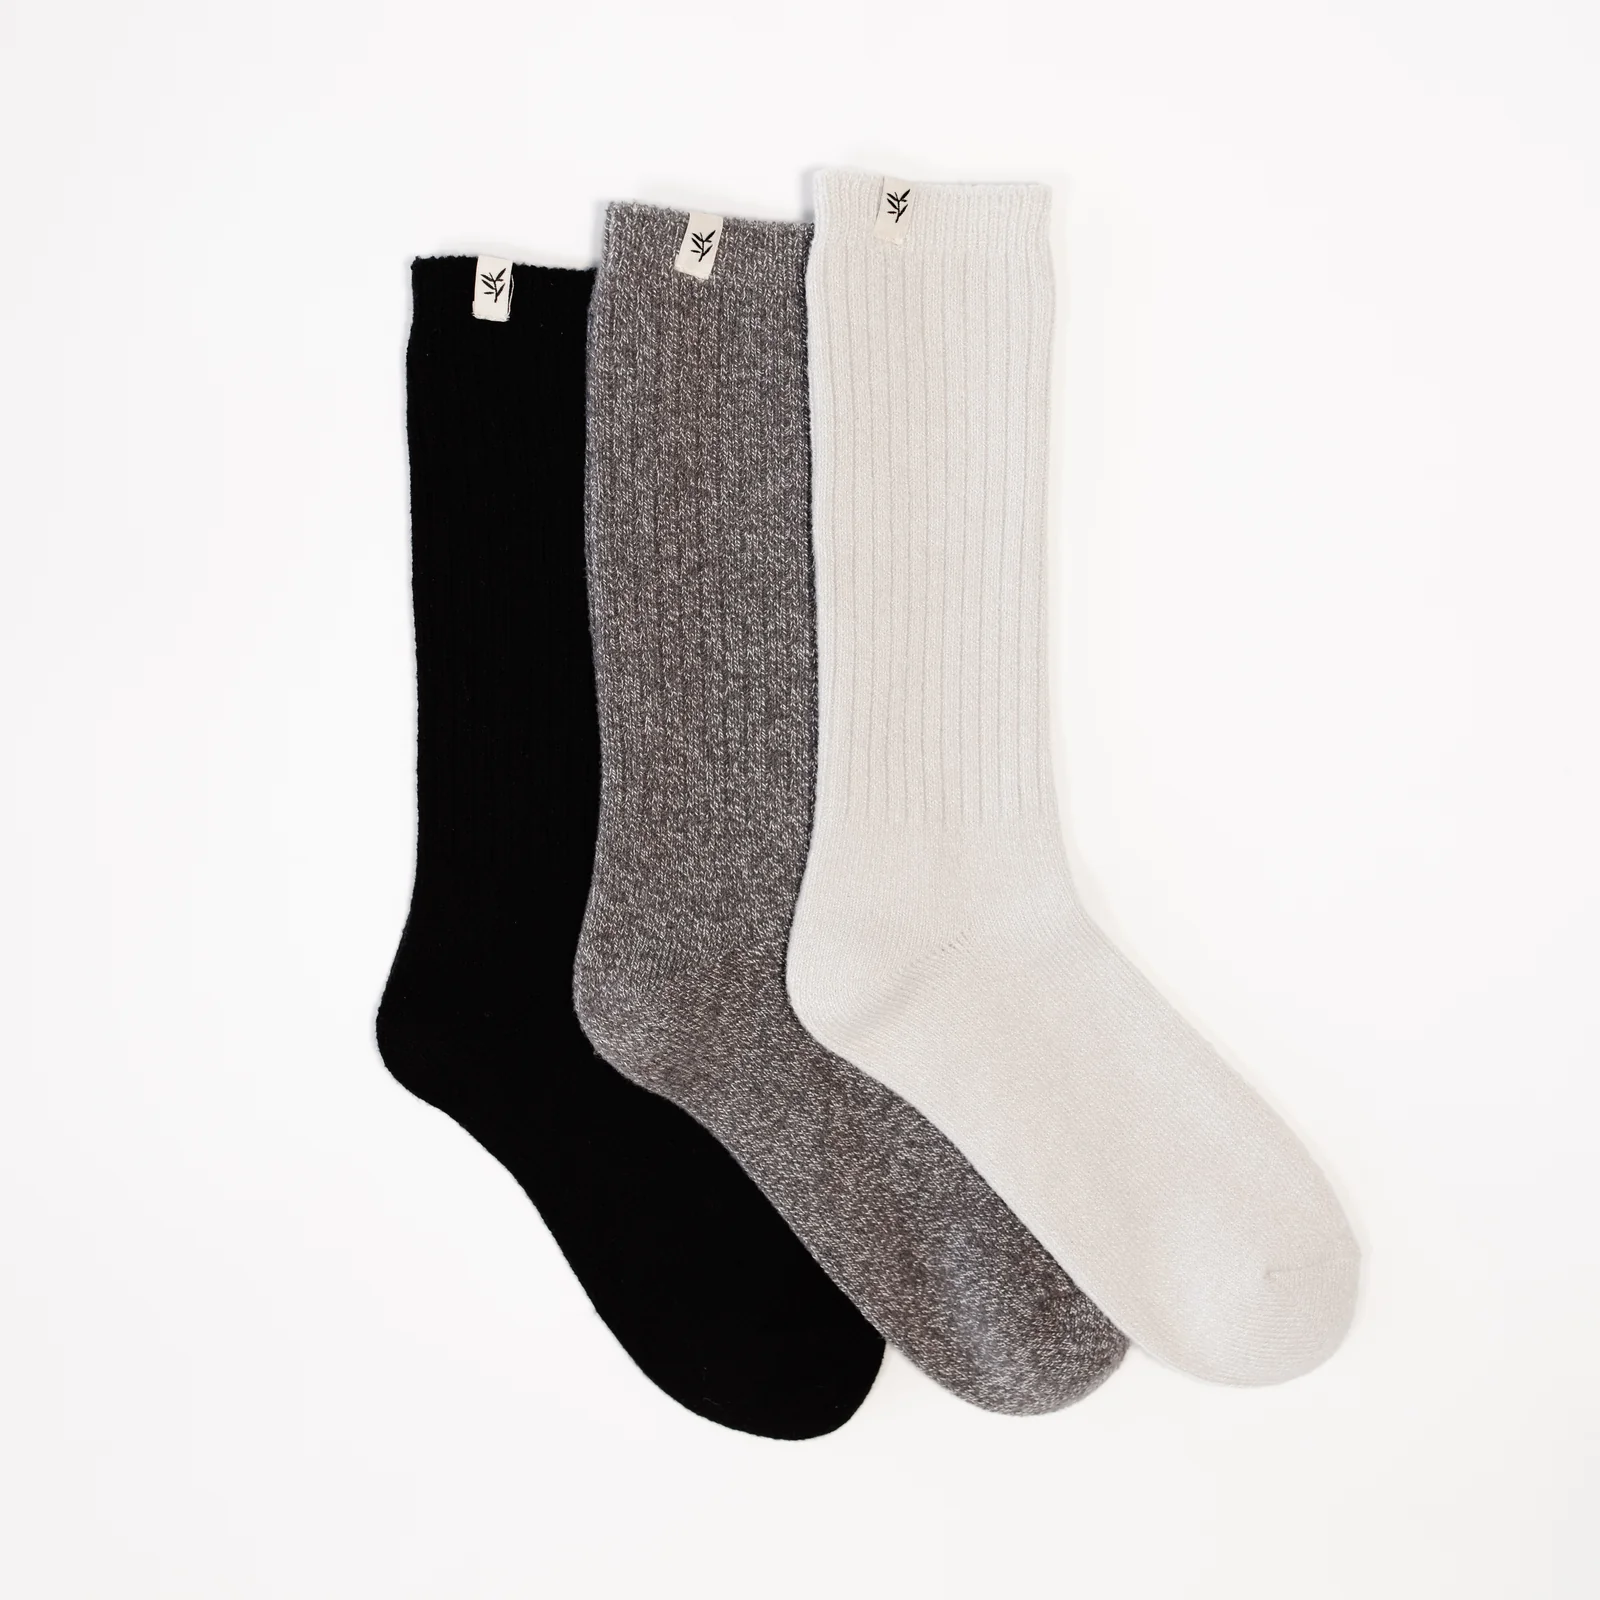 Brand - Goodthreads Men's 5-Pack Patterned Socks, Assorted